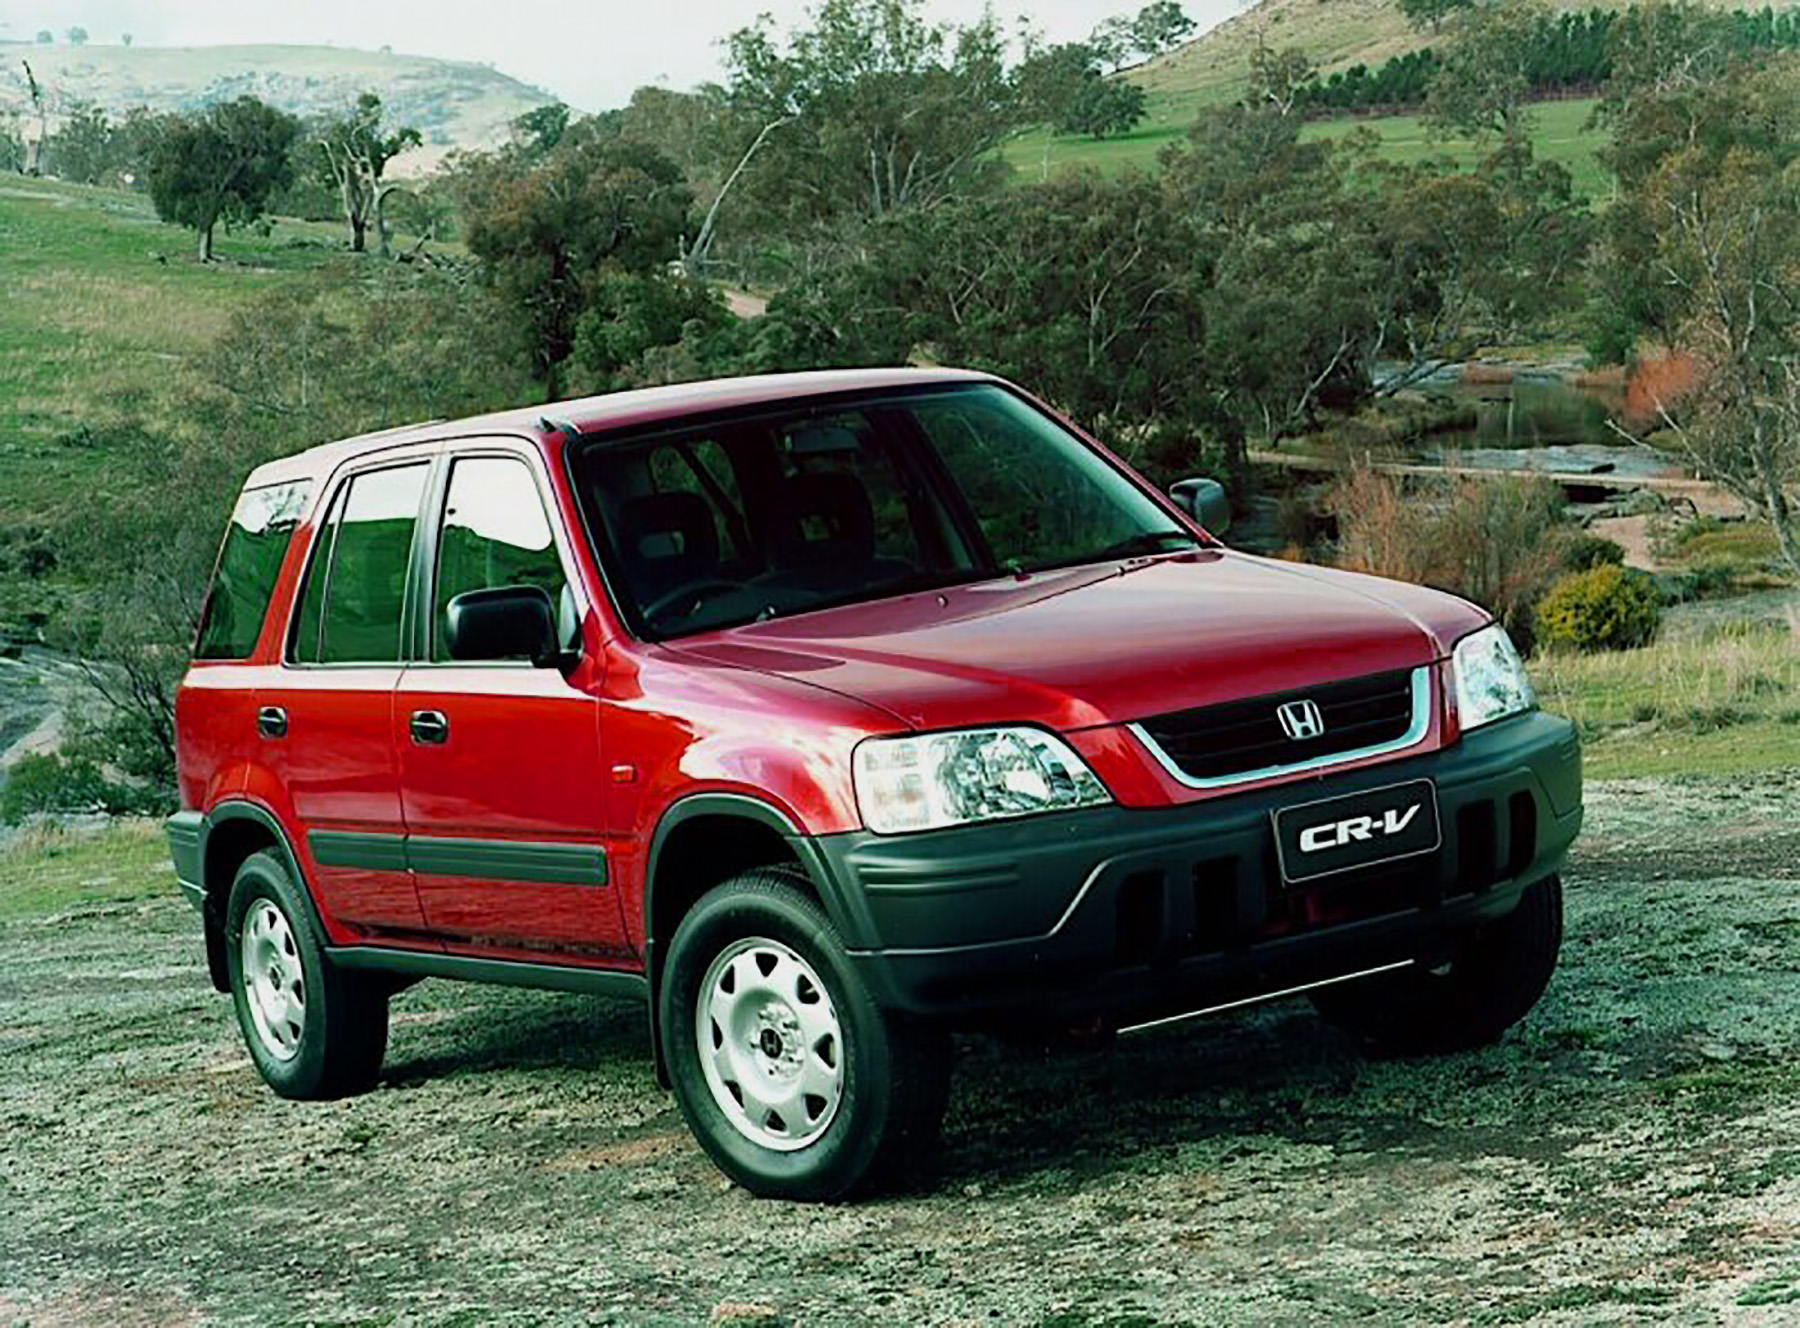 Хонда црв 98 года. Honda CRV 1997. Honda CRV rd1. Honda CR-V rd1 1997. Honda CRV 1.